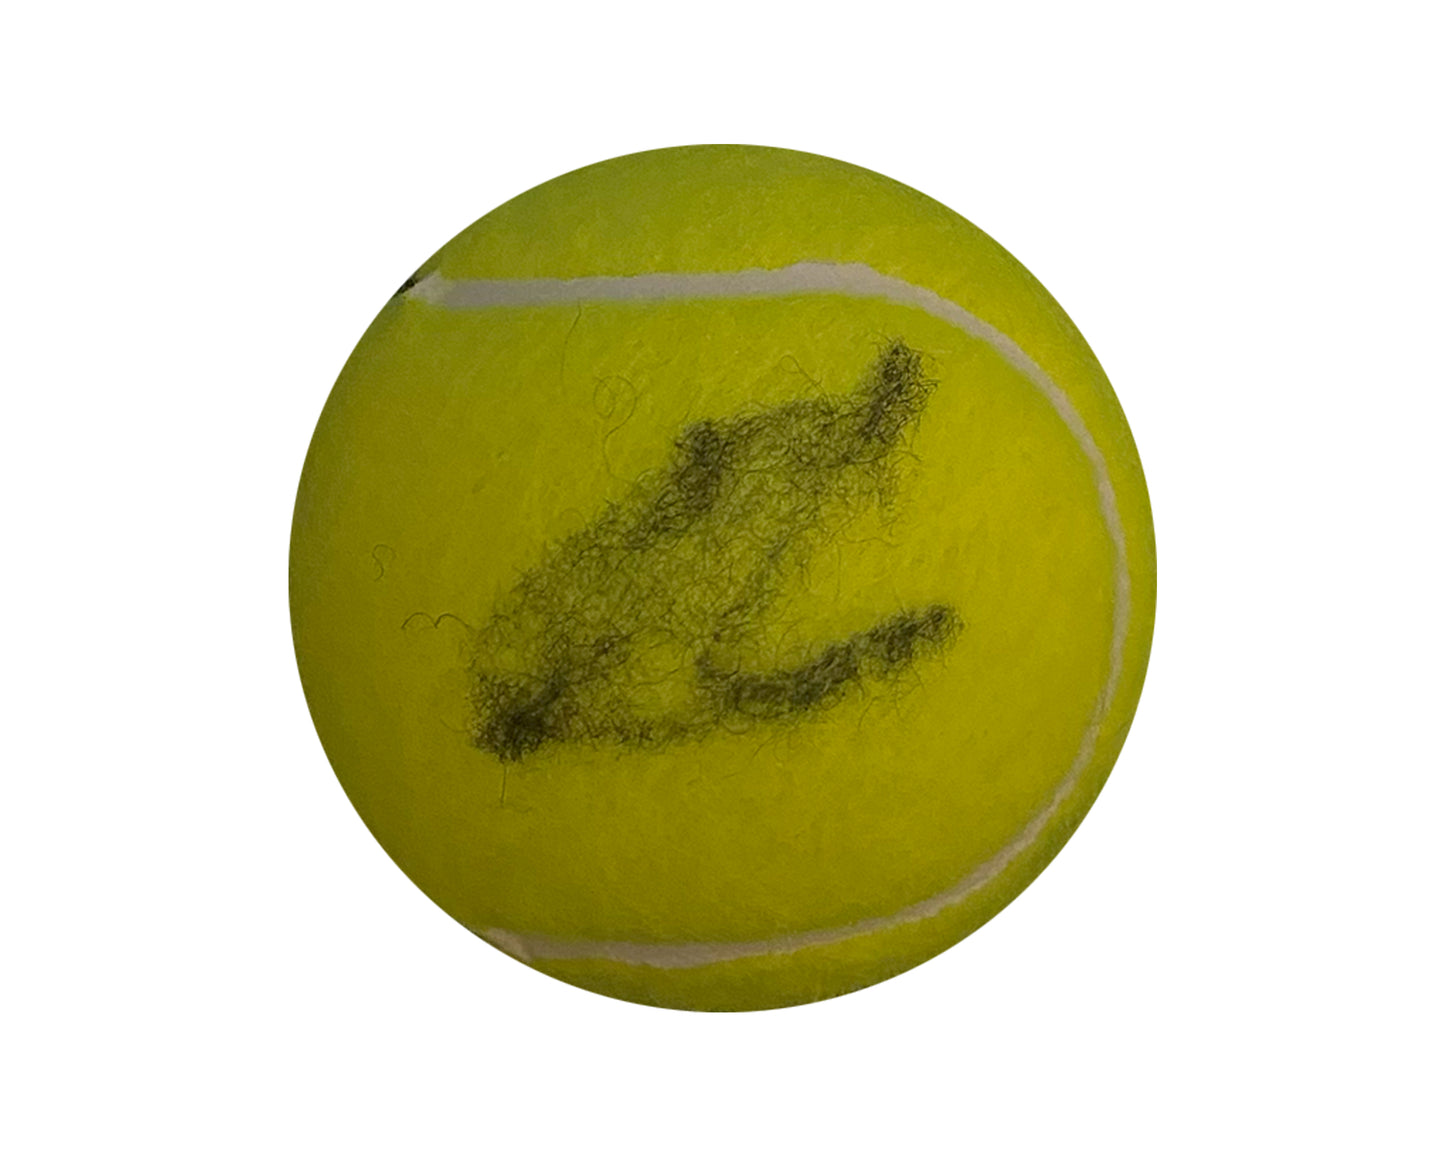 Thanasi Kokkinakis Autographed Tennis Ball